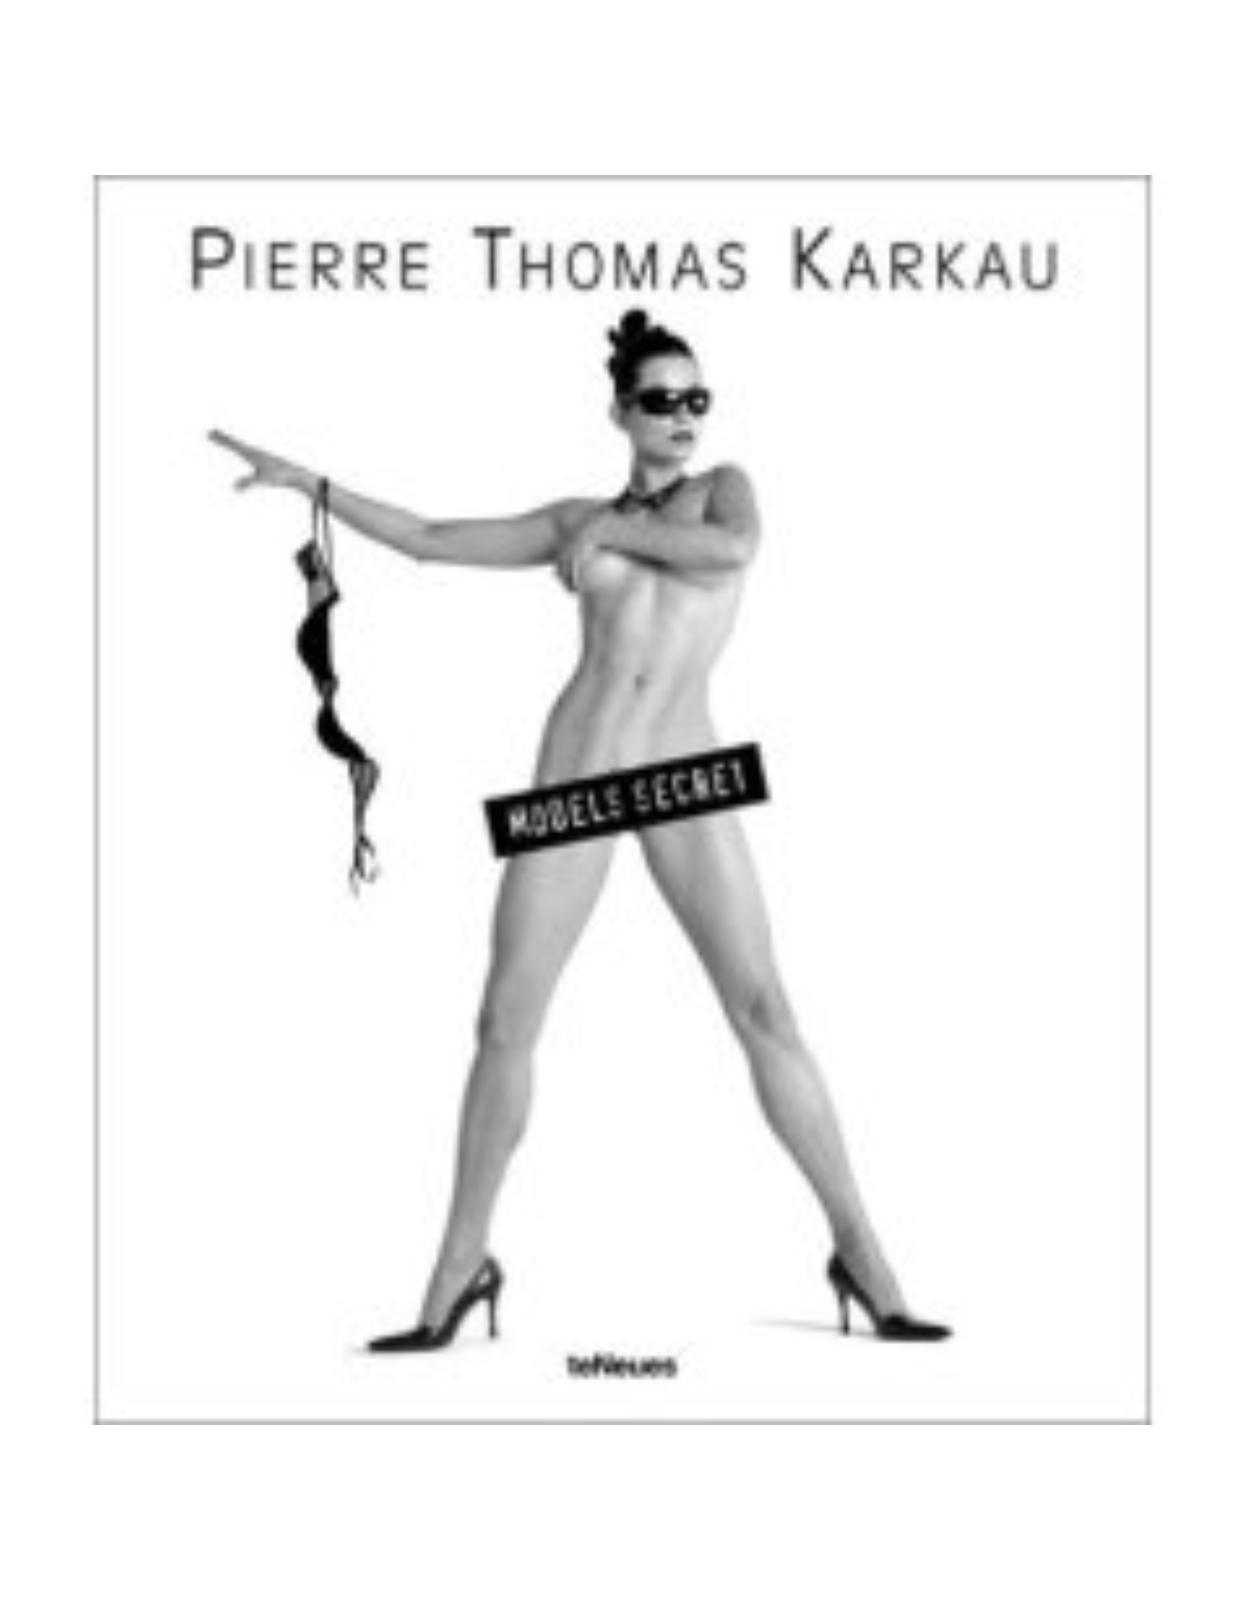 Pierre Thomas Karkau - Models Secret